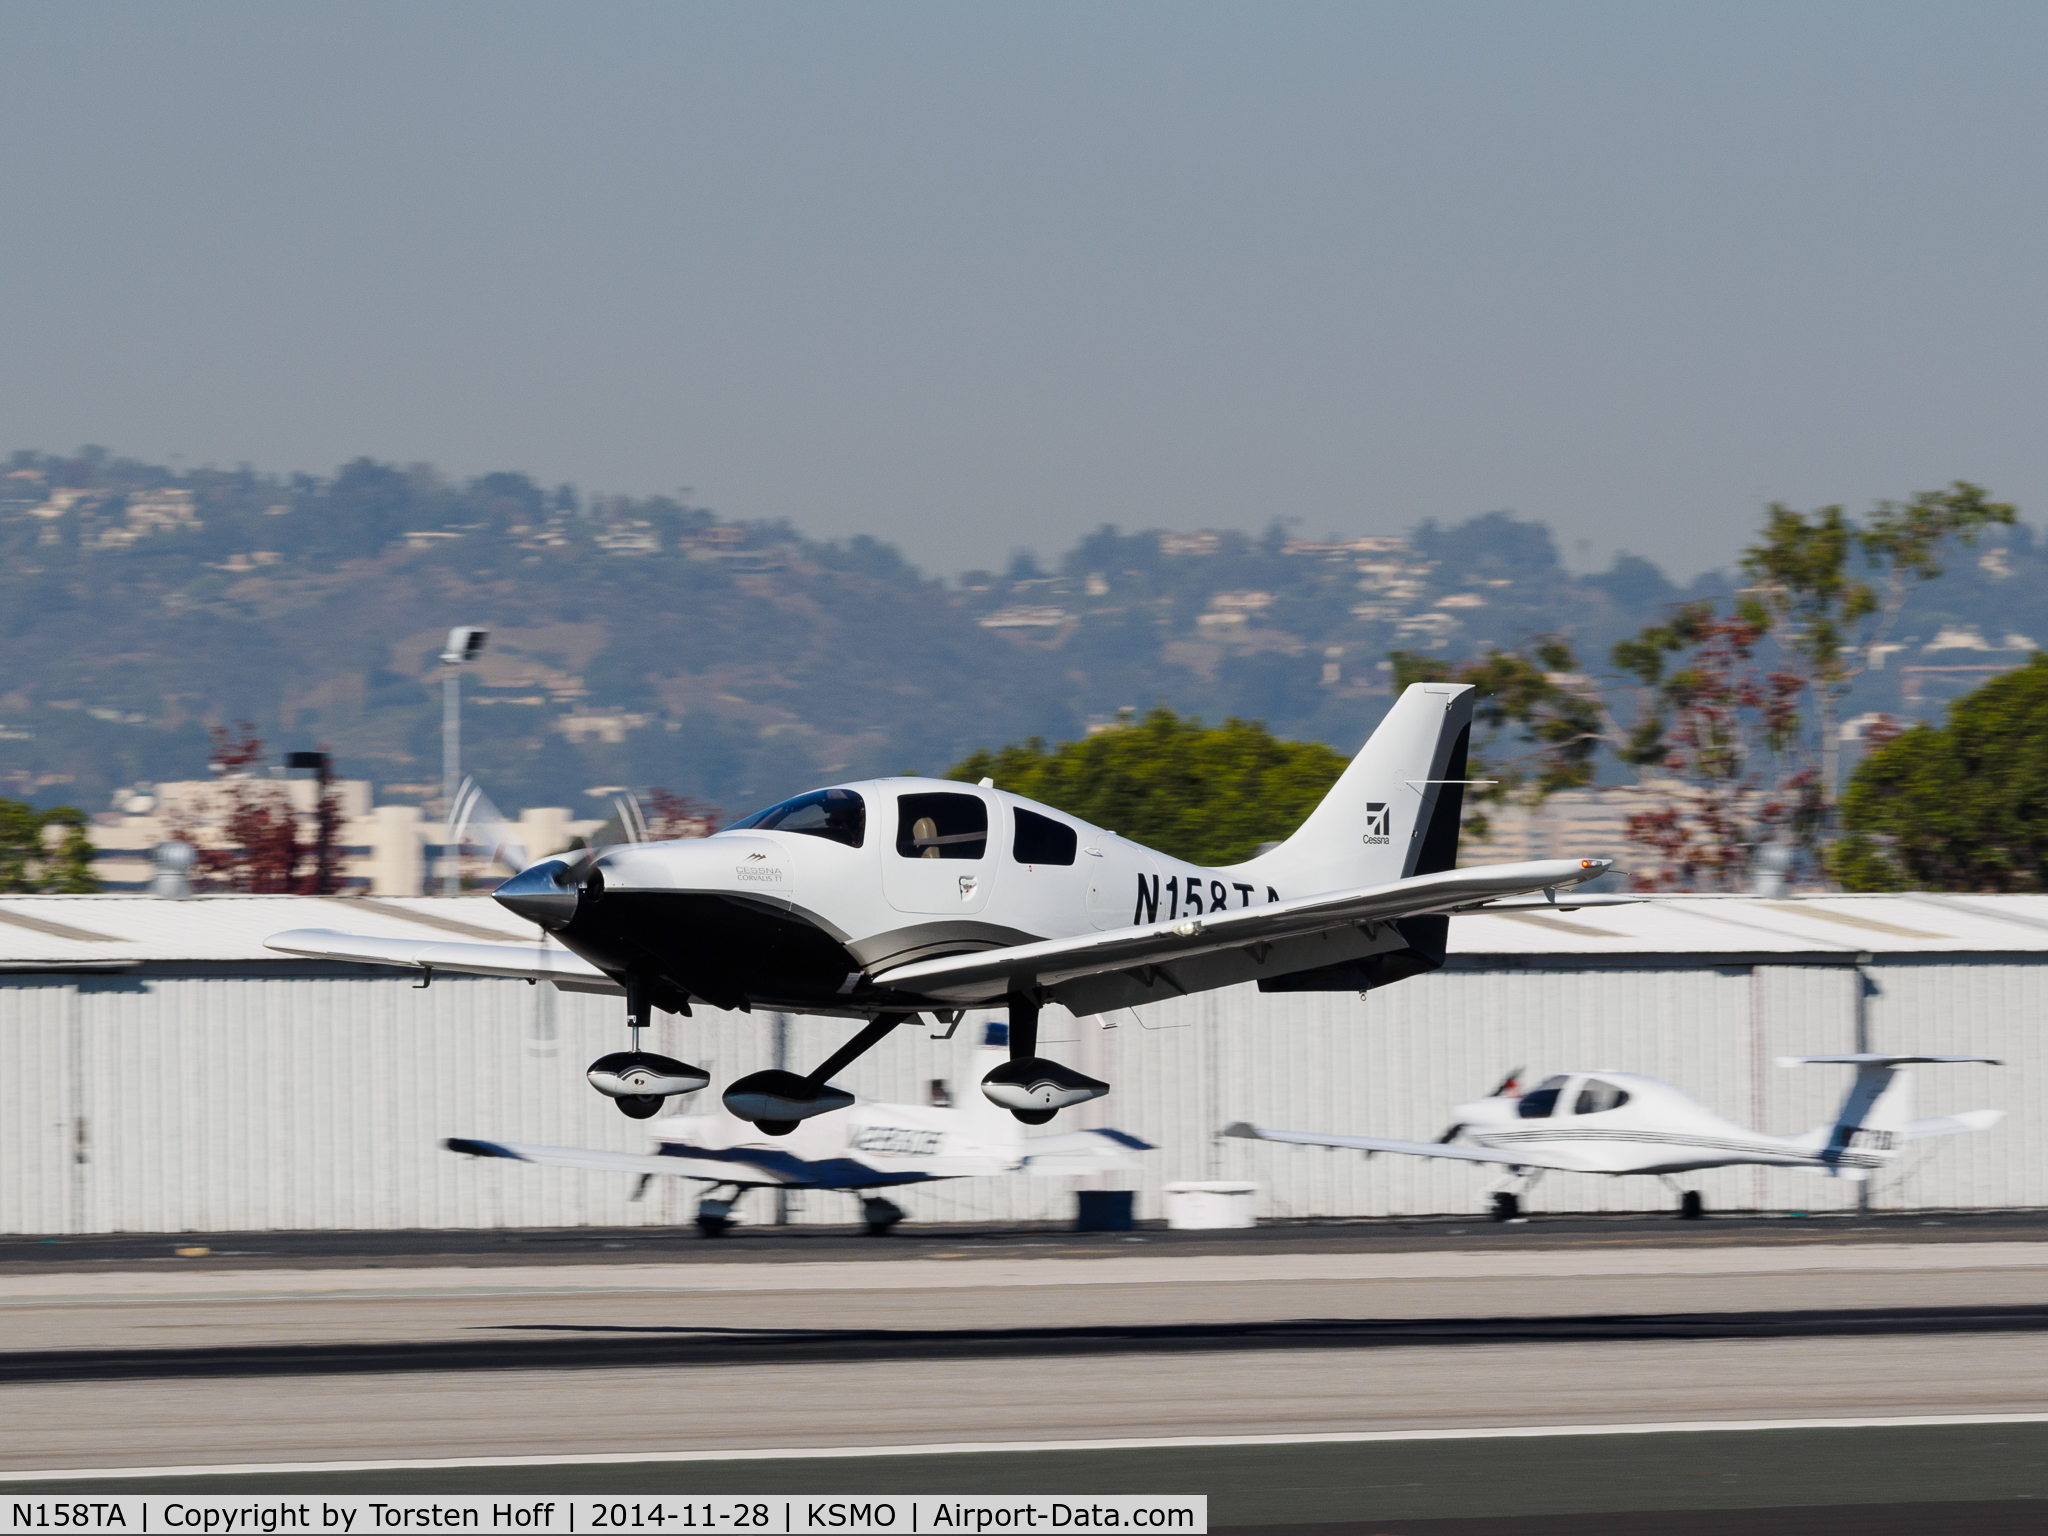 N158TA, 2008 Cessna LC41-550FG C/N 411005, N158TA arriving on RWY 21